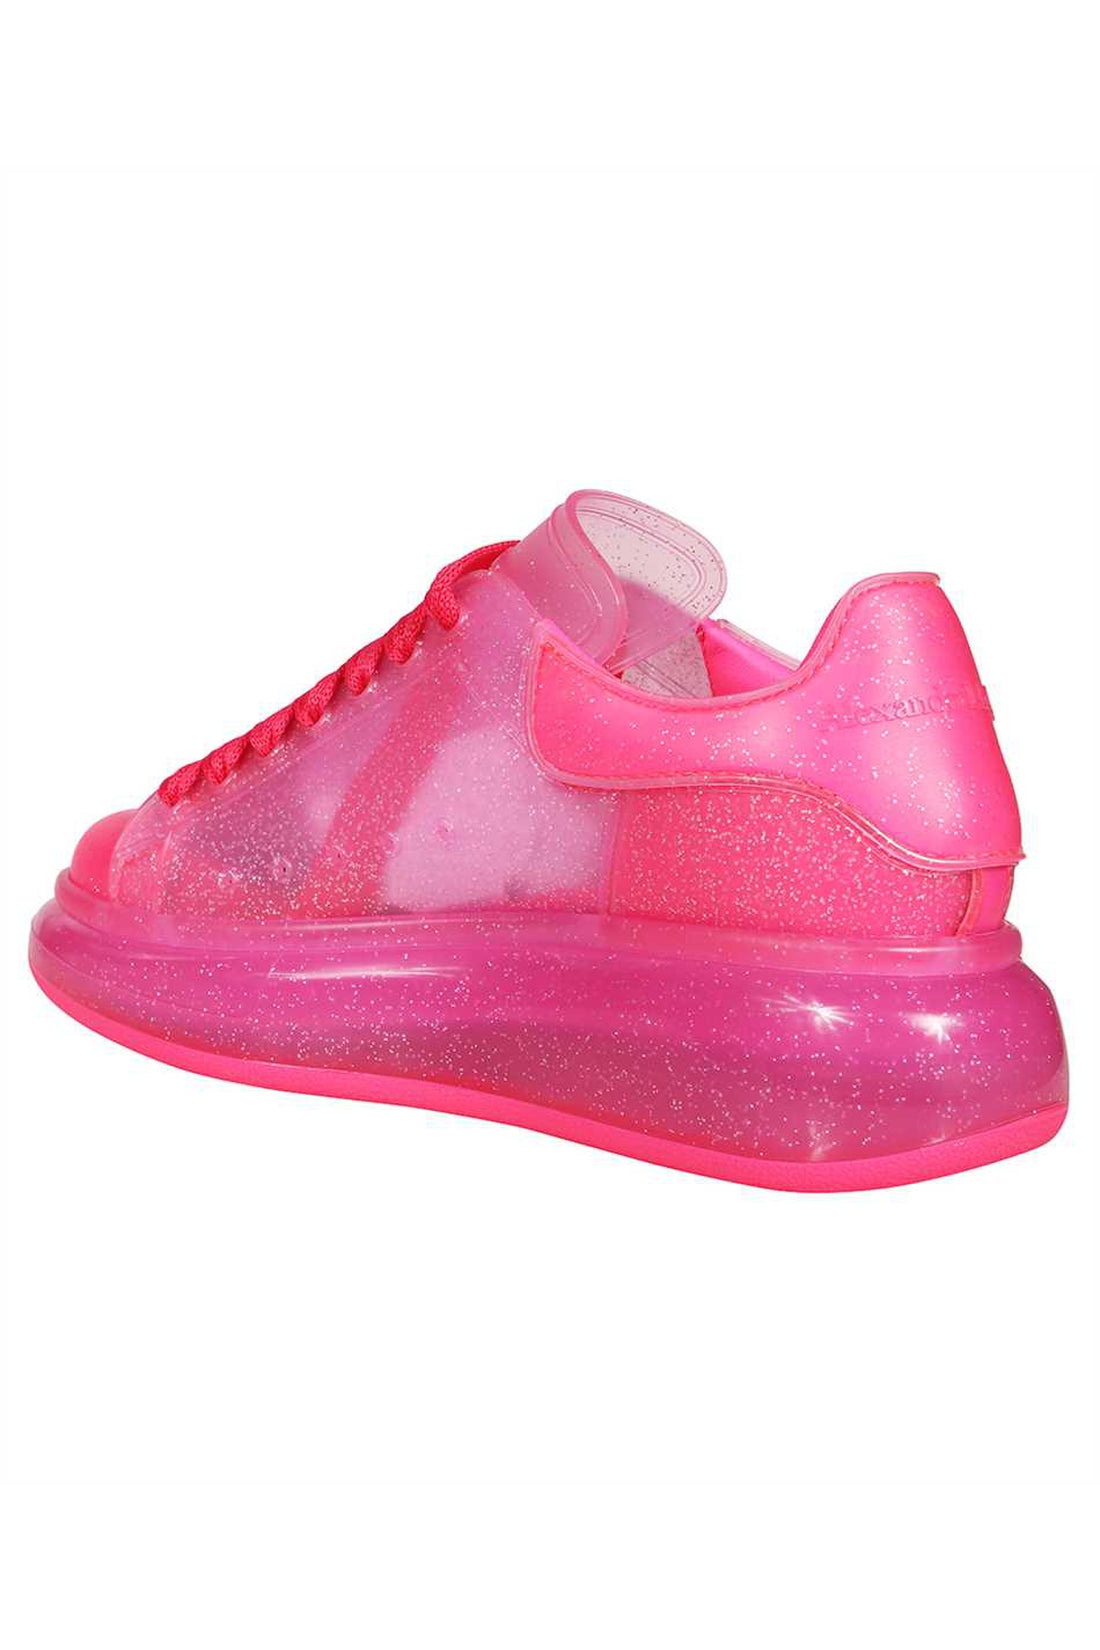 Alexander McQueen-OUTLET-SALE-Larry glittery rubber sneakers-ARCHIVIST